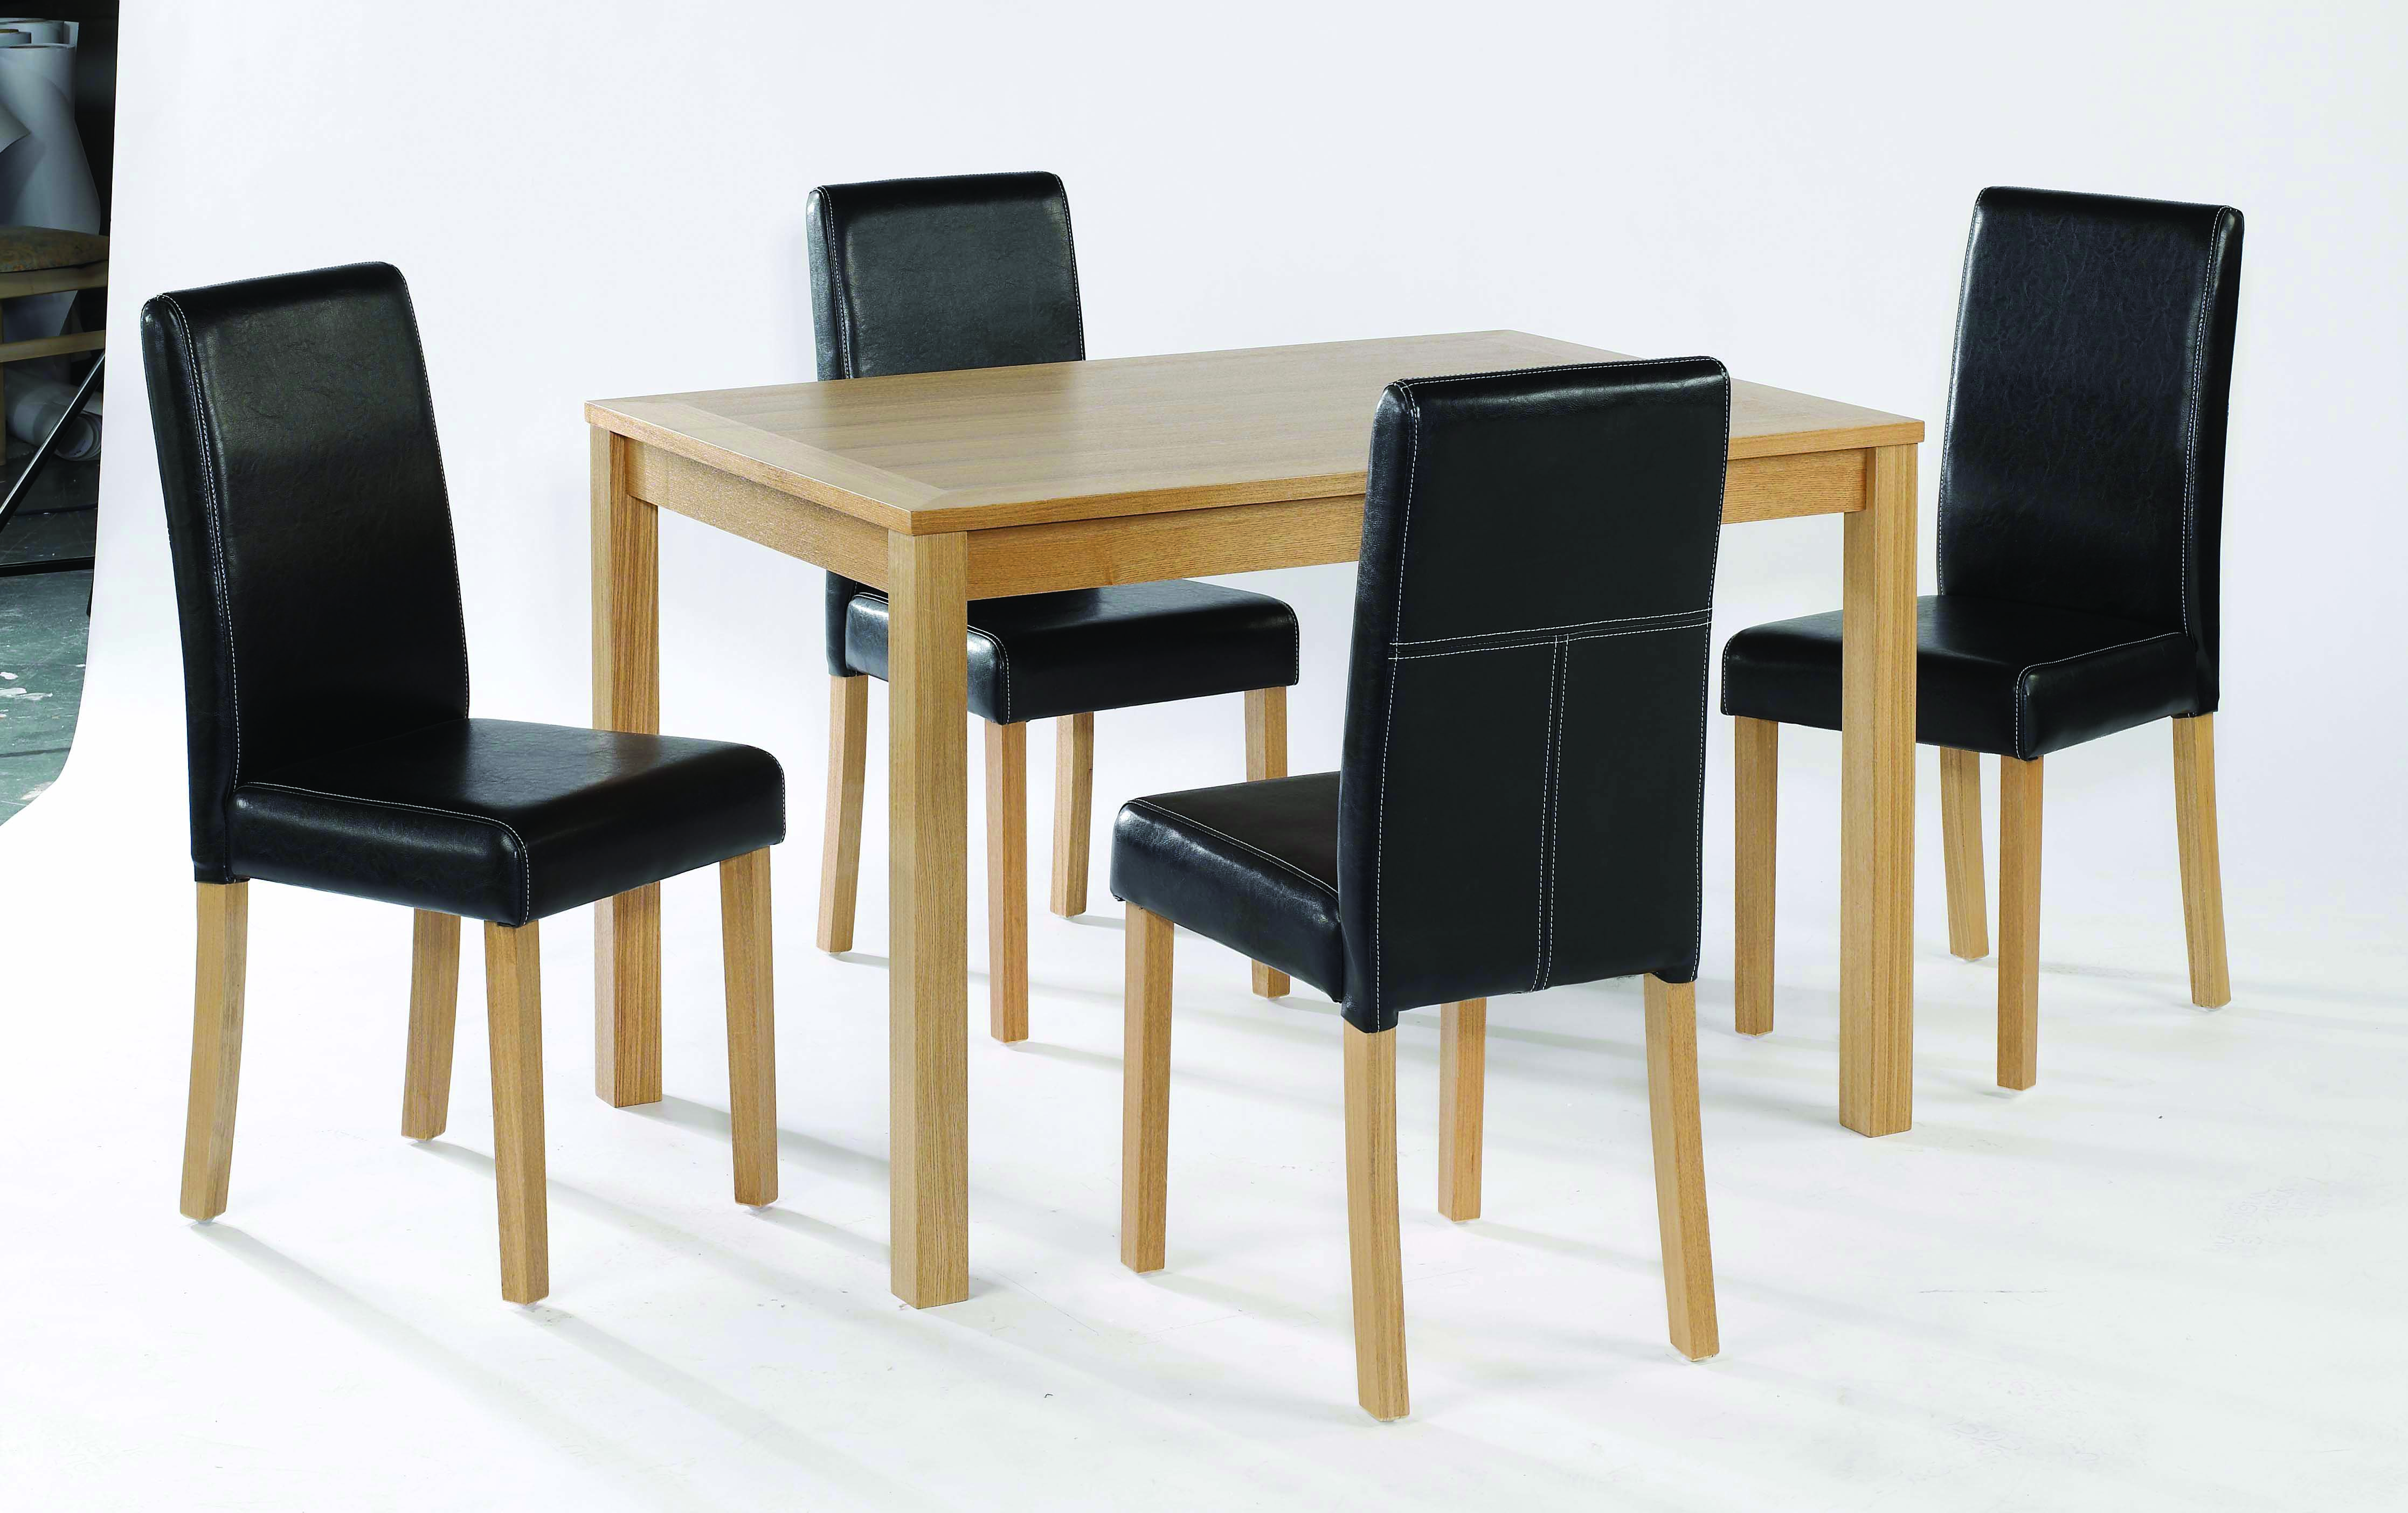 LPD Oakridge Medium Table with 4 Chair Dining Set Black